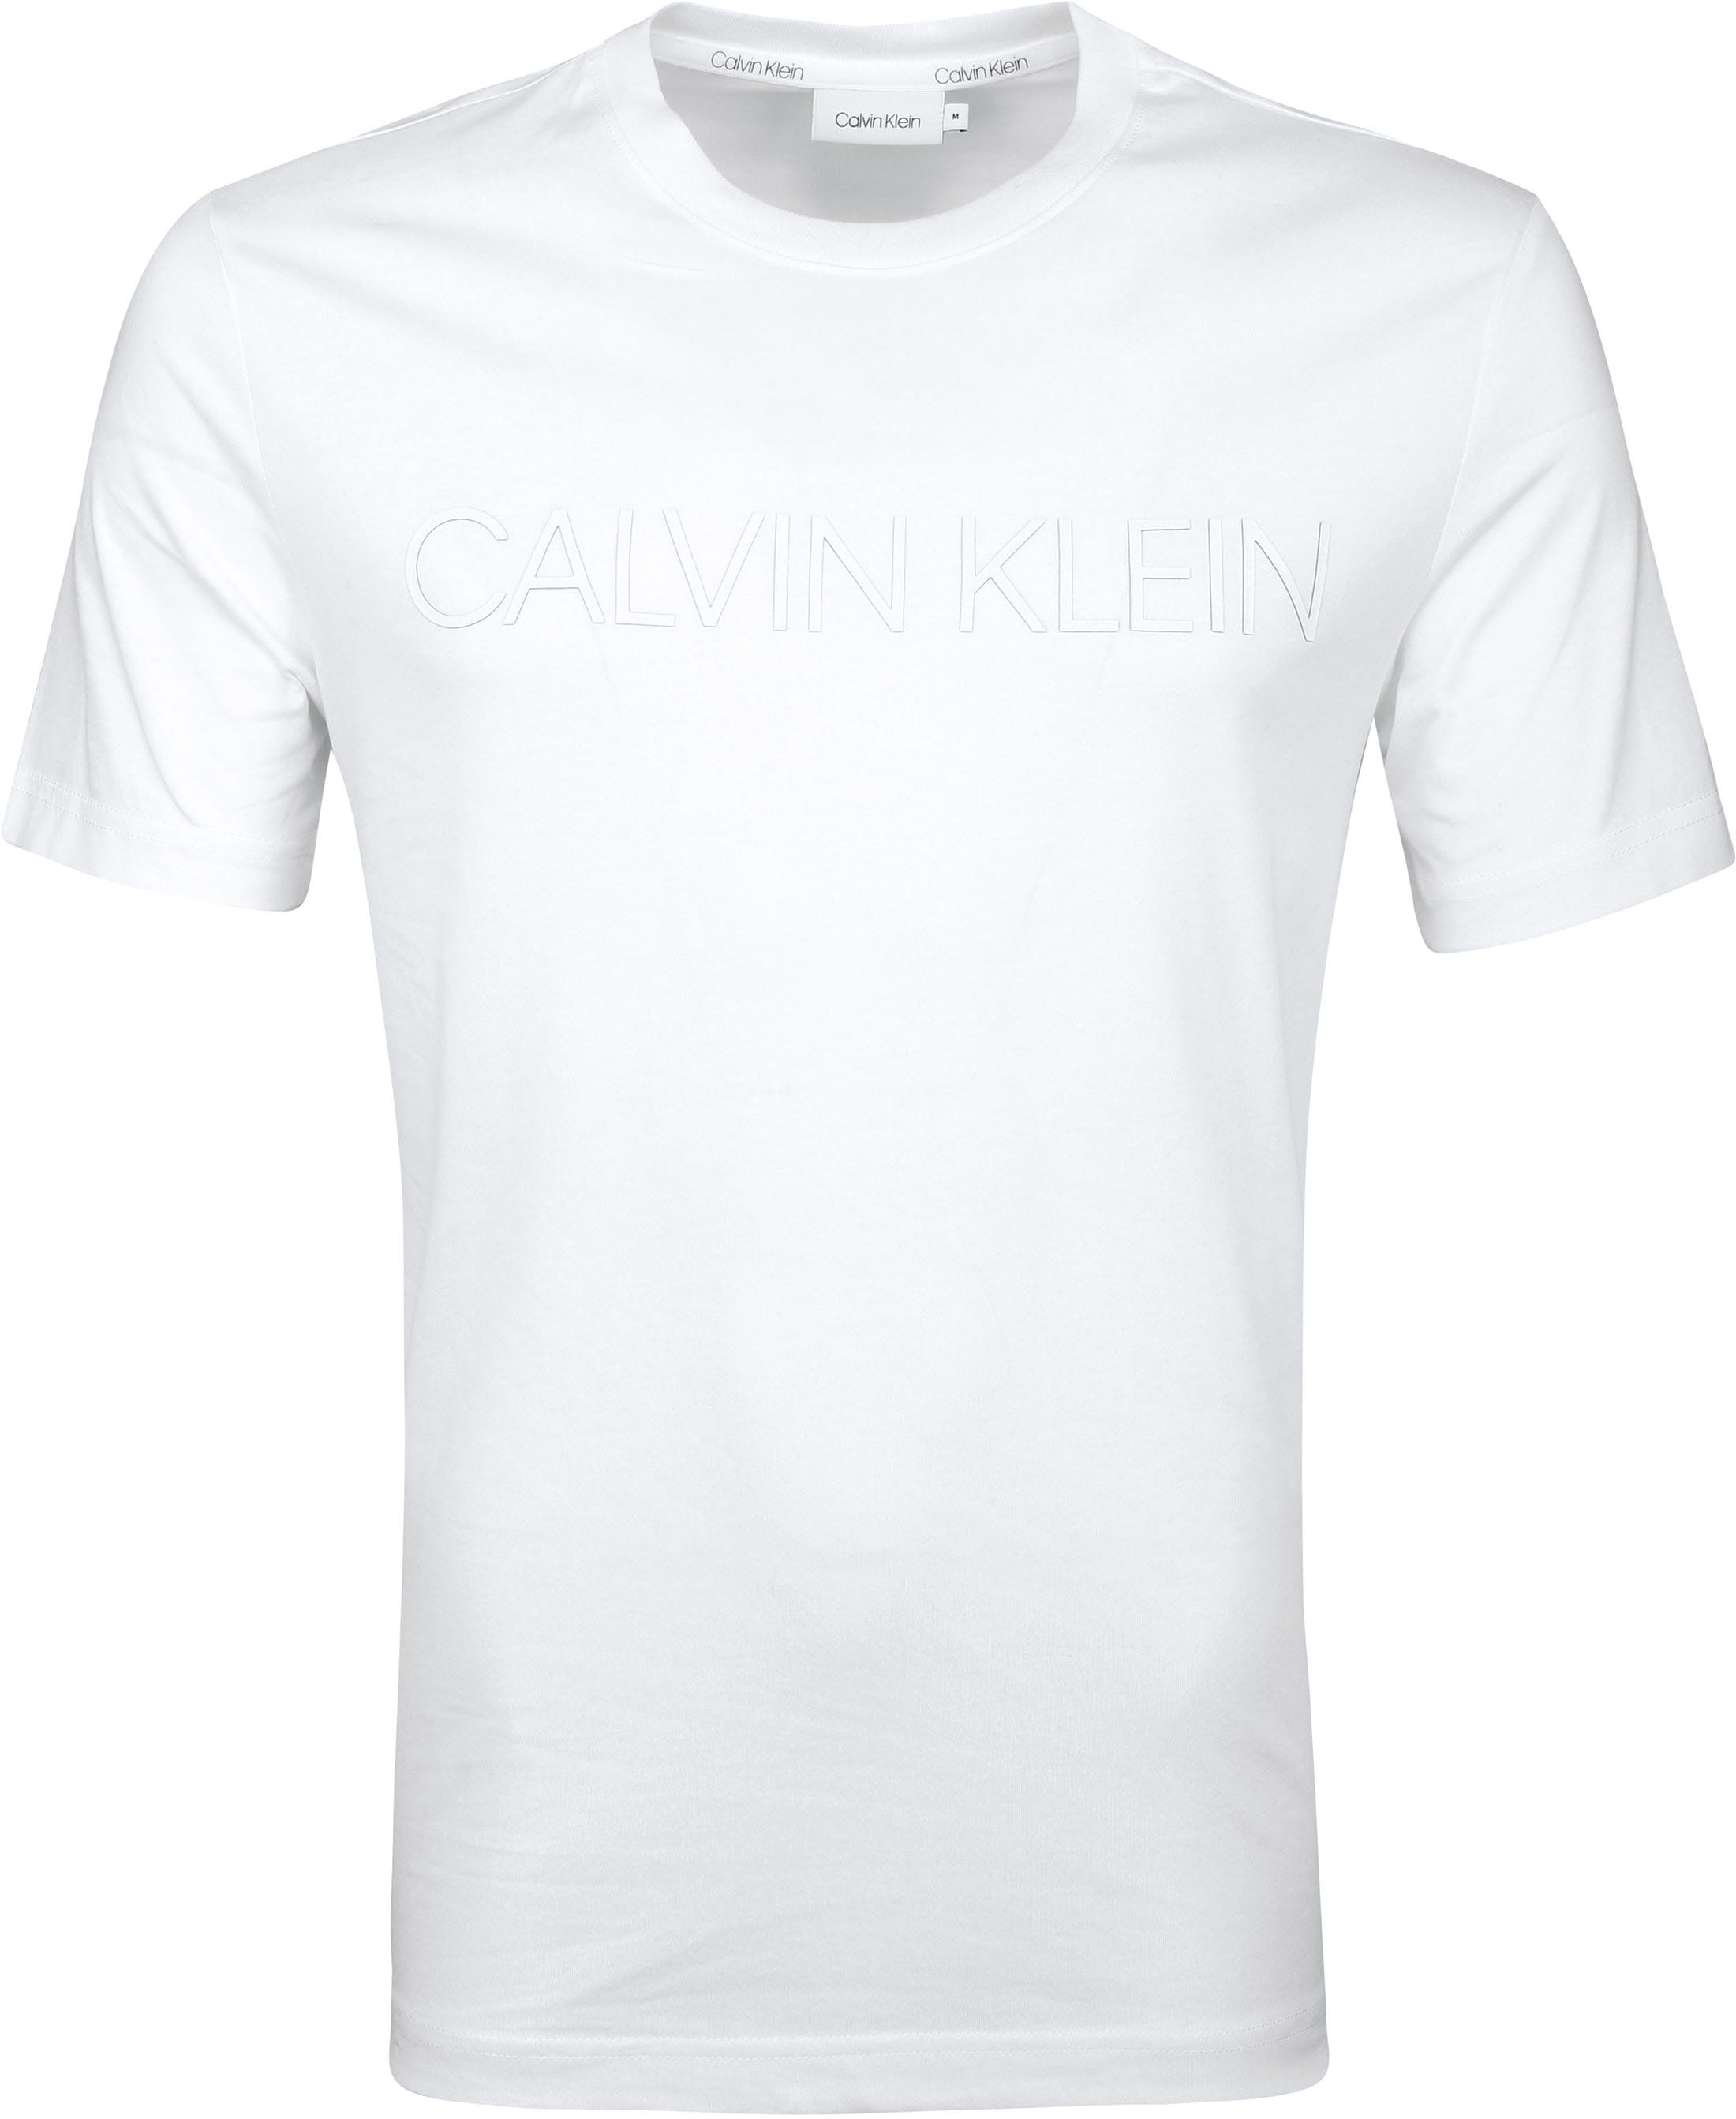 Calvin Klein T-Shirt Logo Groot White size L